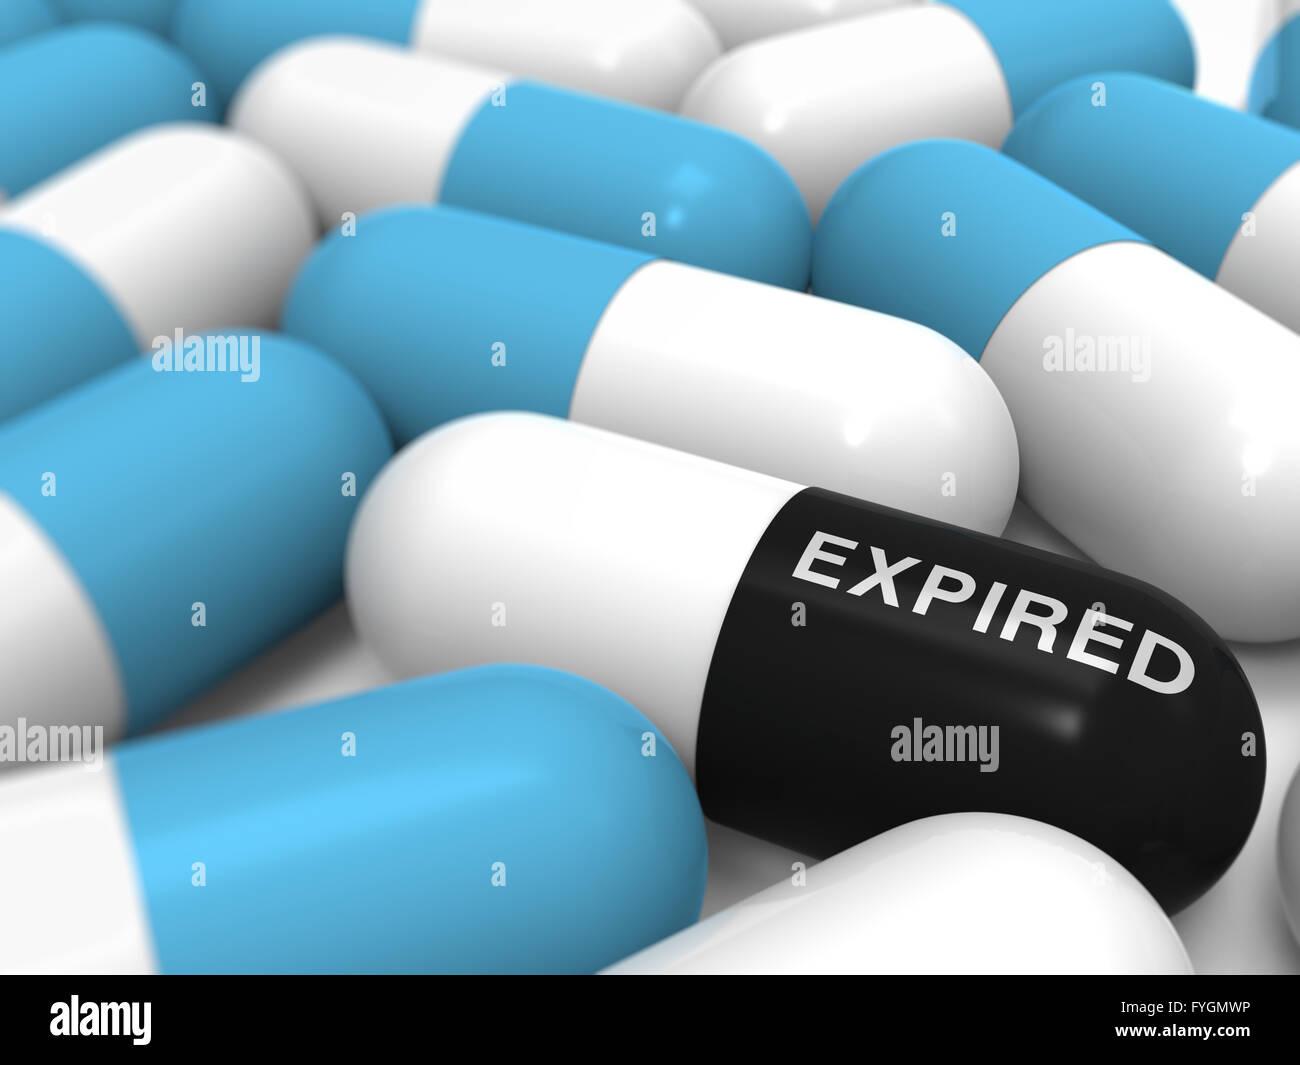 Expired medicine, pharmaceutical, medical, drugs Stock Photo